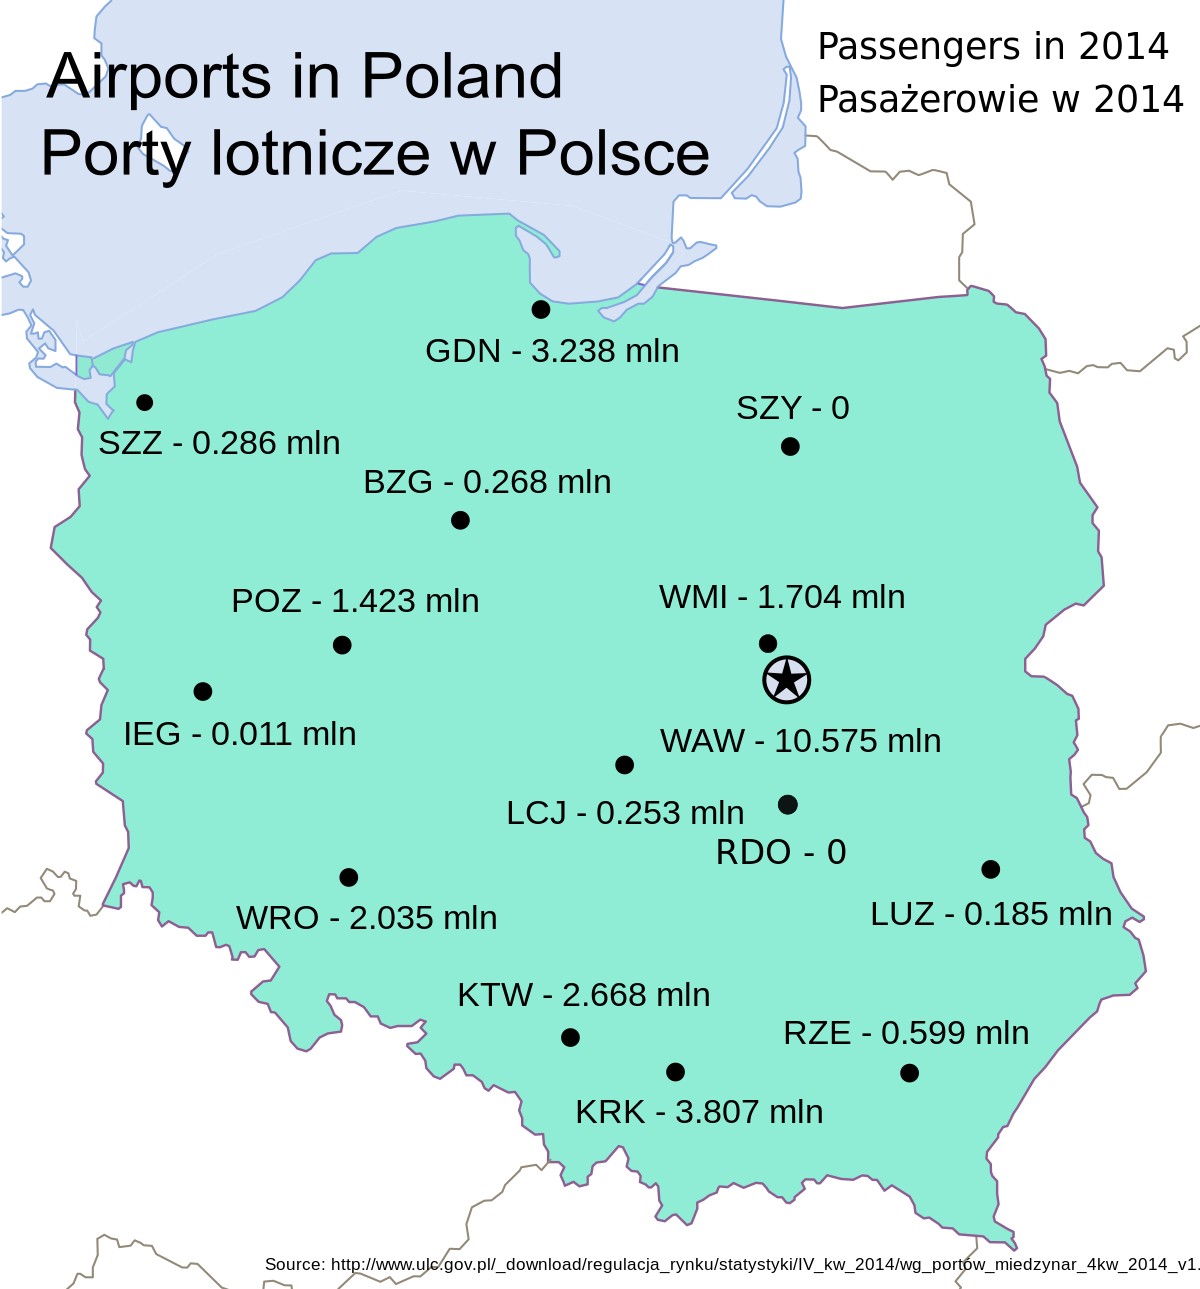 flughäfen polen karte Liste Der Internationalen Flughafen In Polen Wikipedia flughäfen polen karte